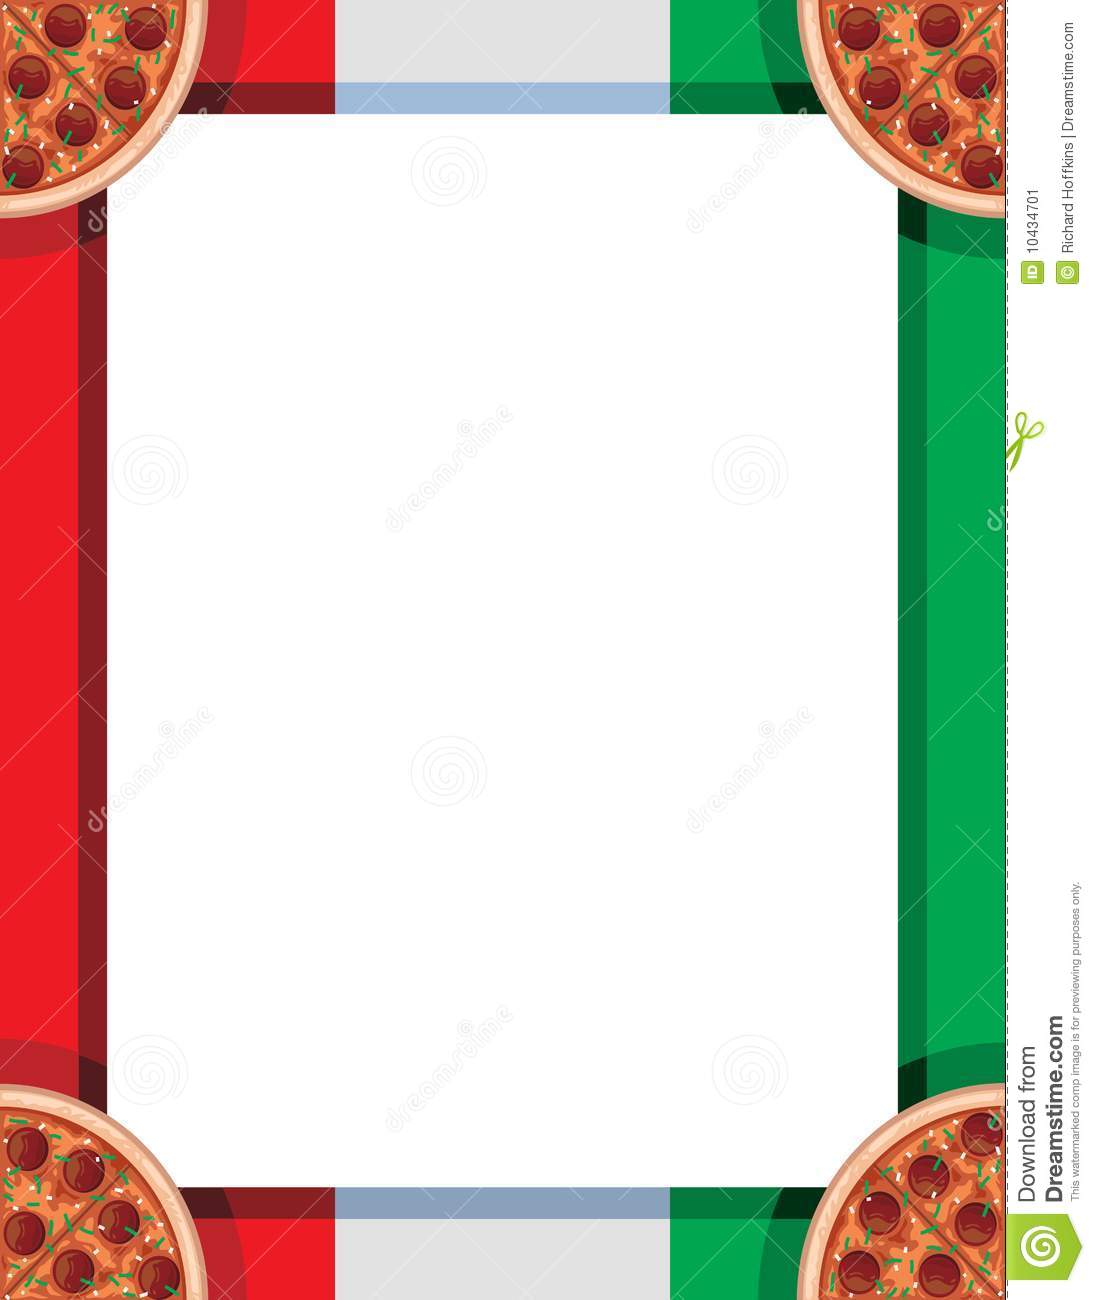 Stock Image  Italian Pizza Border  Image  10434701